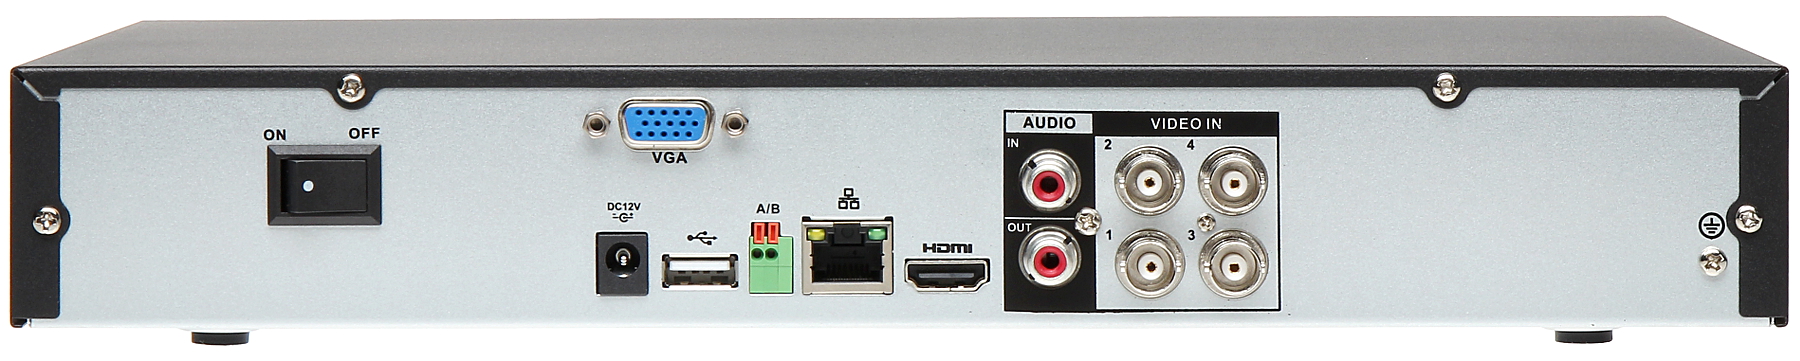 4 channel tribrid hd recorder manual